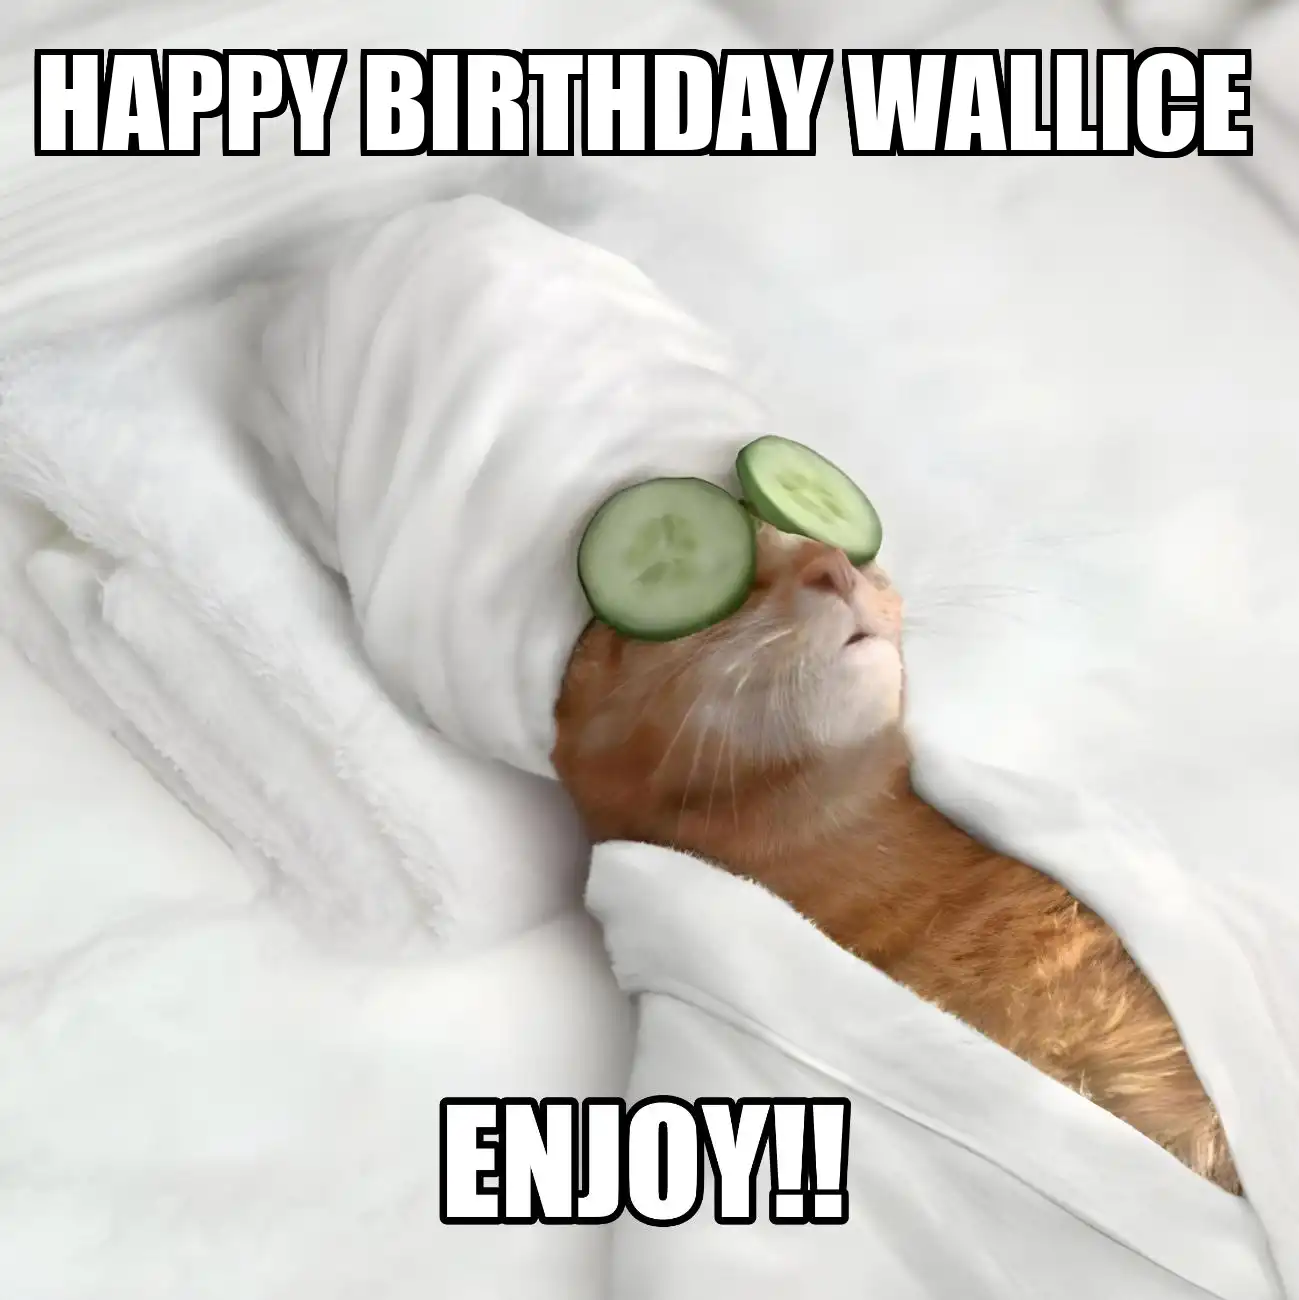 Happy Birthday Wallice Enjoy Cat Meme